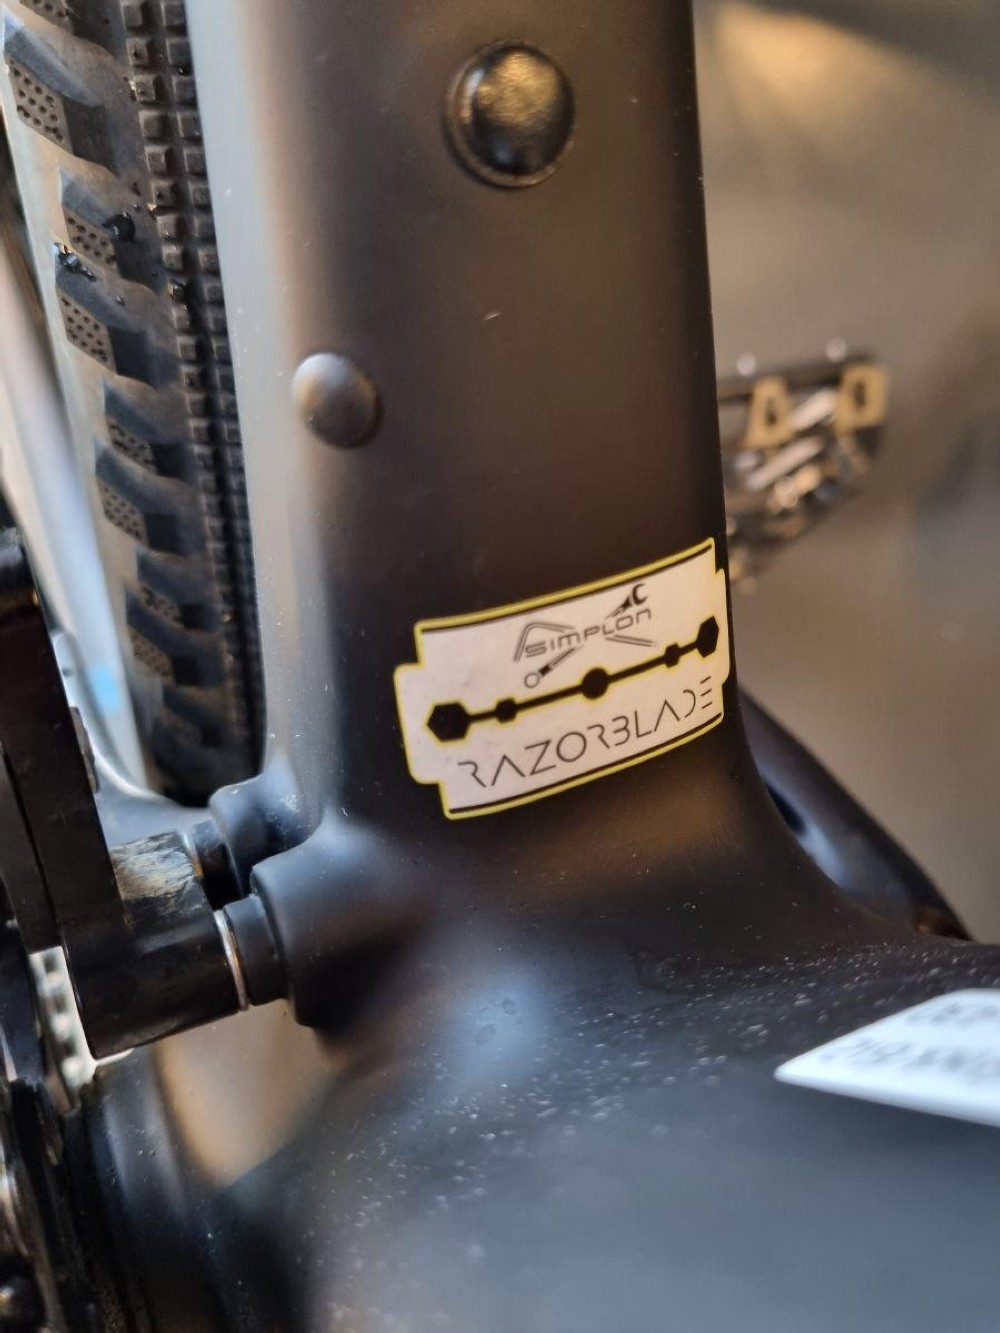 Mountainbike kaufen: SIMPLON Simplon Razorblade Custom Aktion